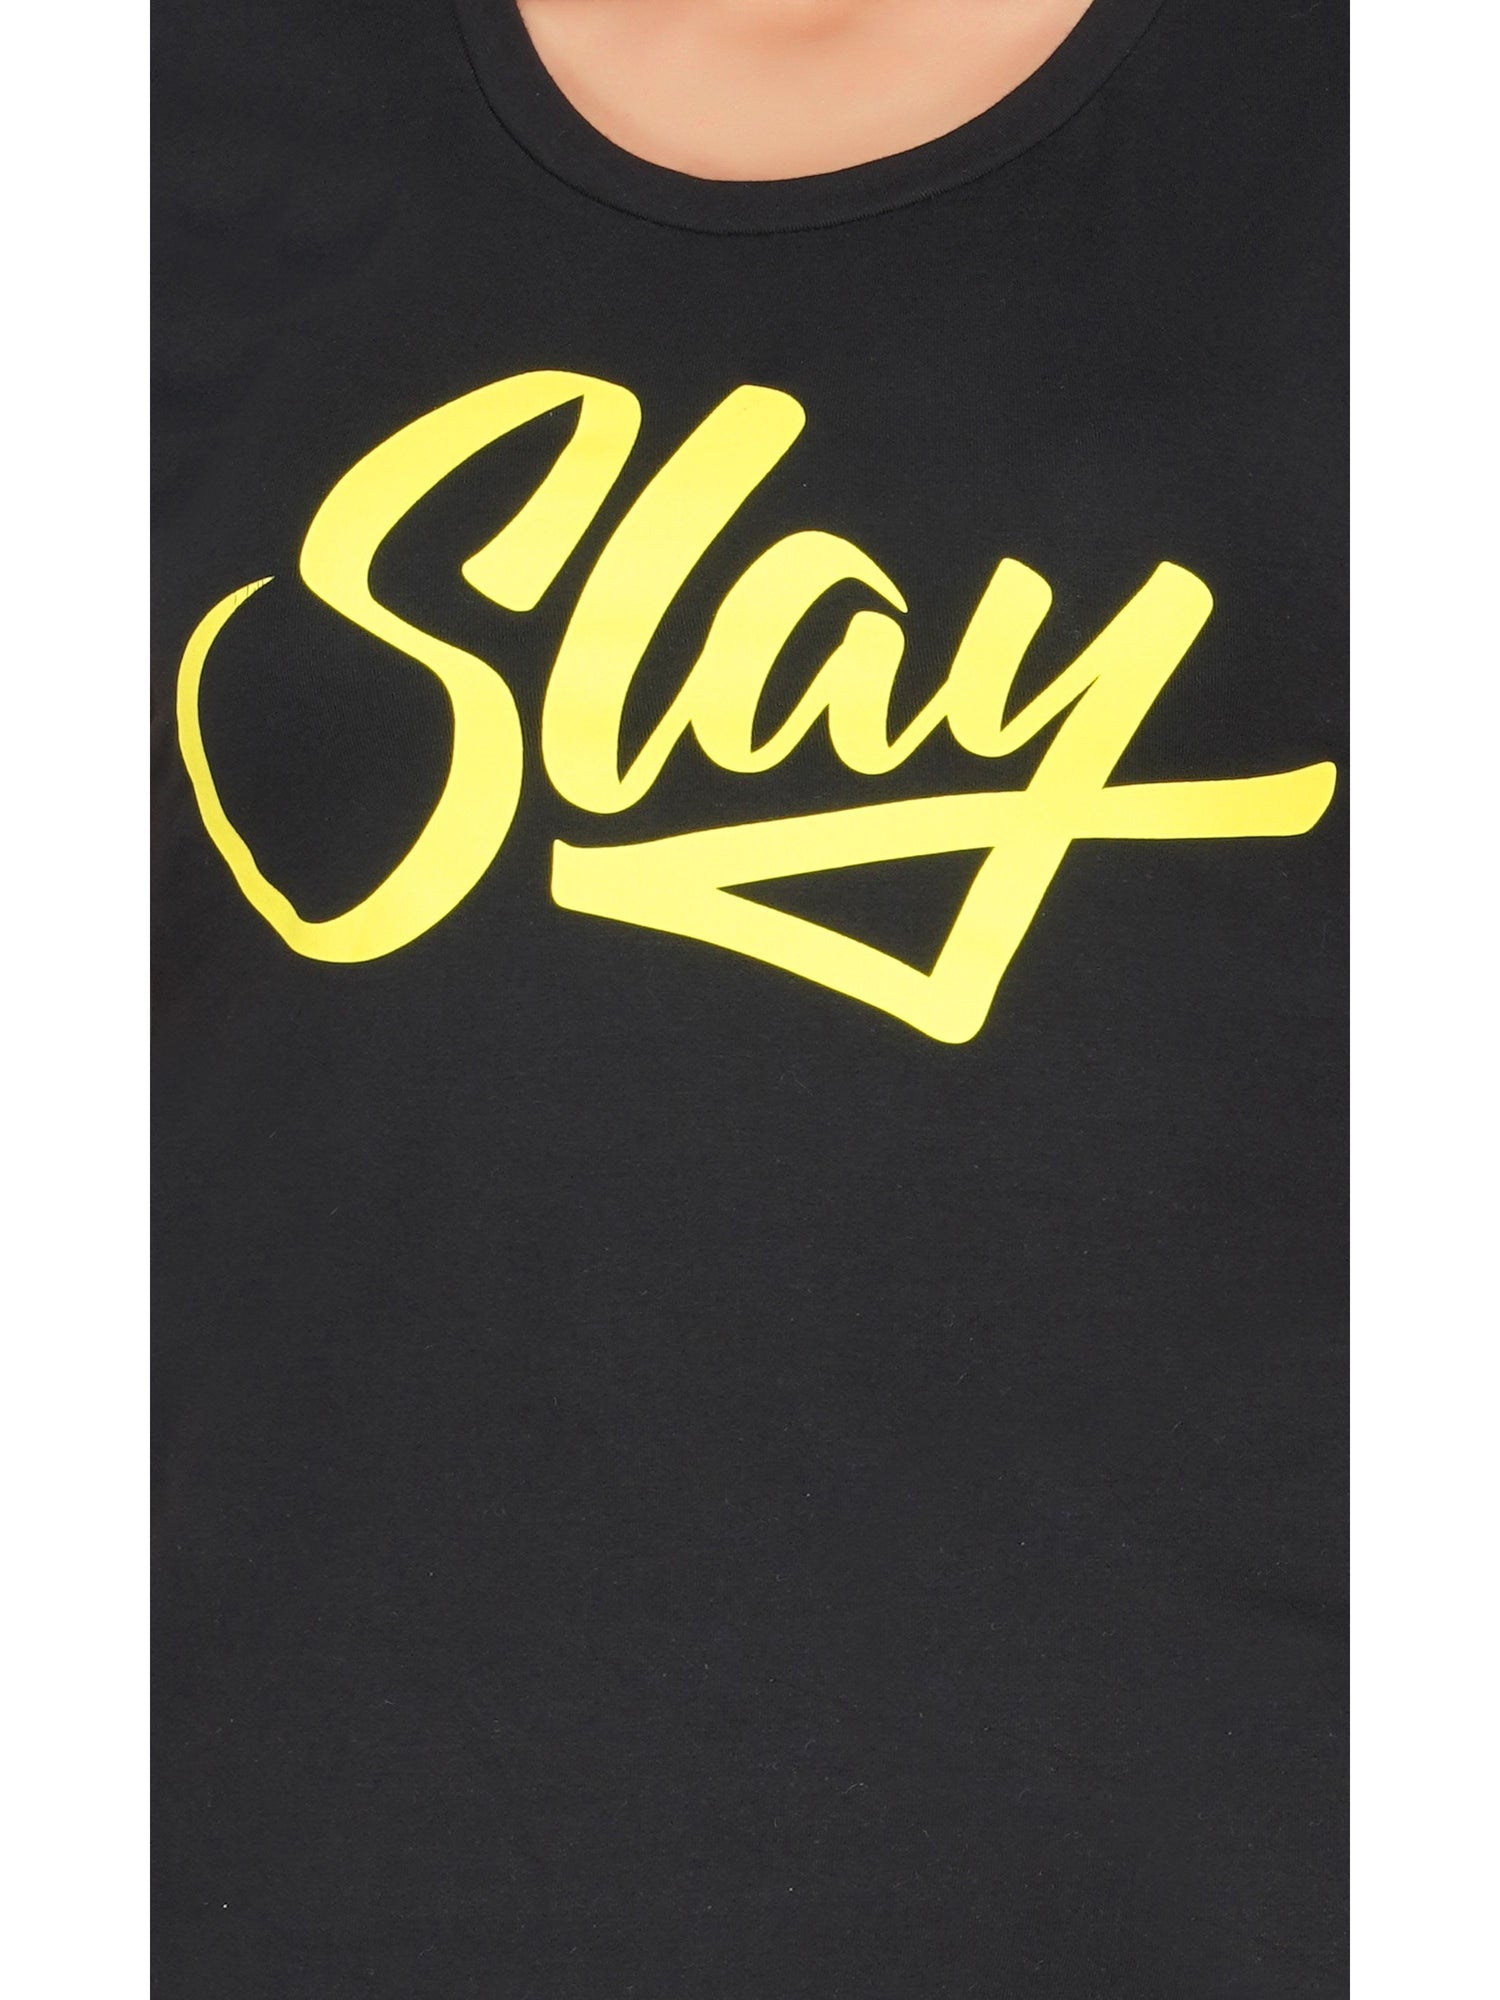 SLAY. Sport Yellow Print Black T-shirt-clothing-to-slay.myshopify.com-Print T-Shirt